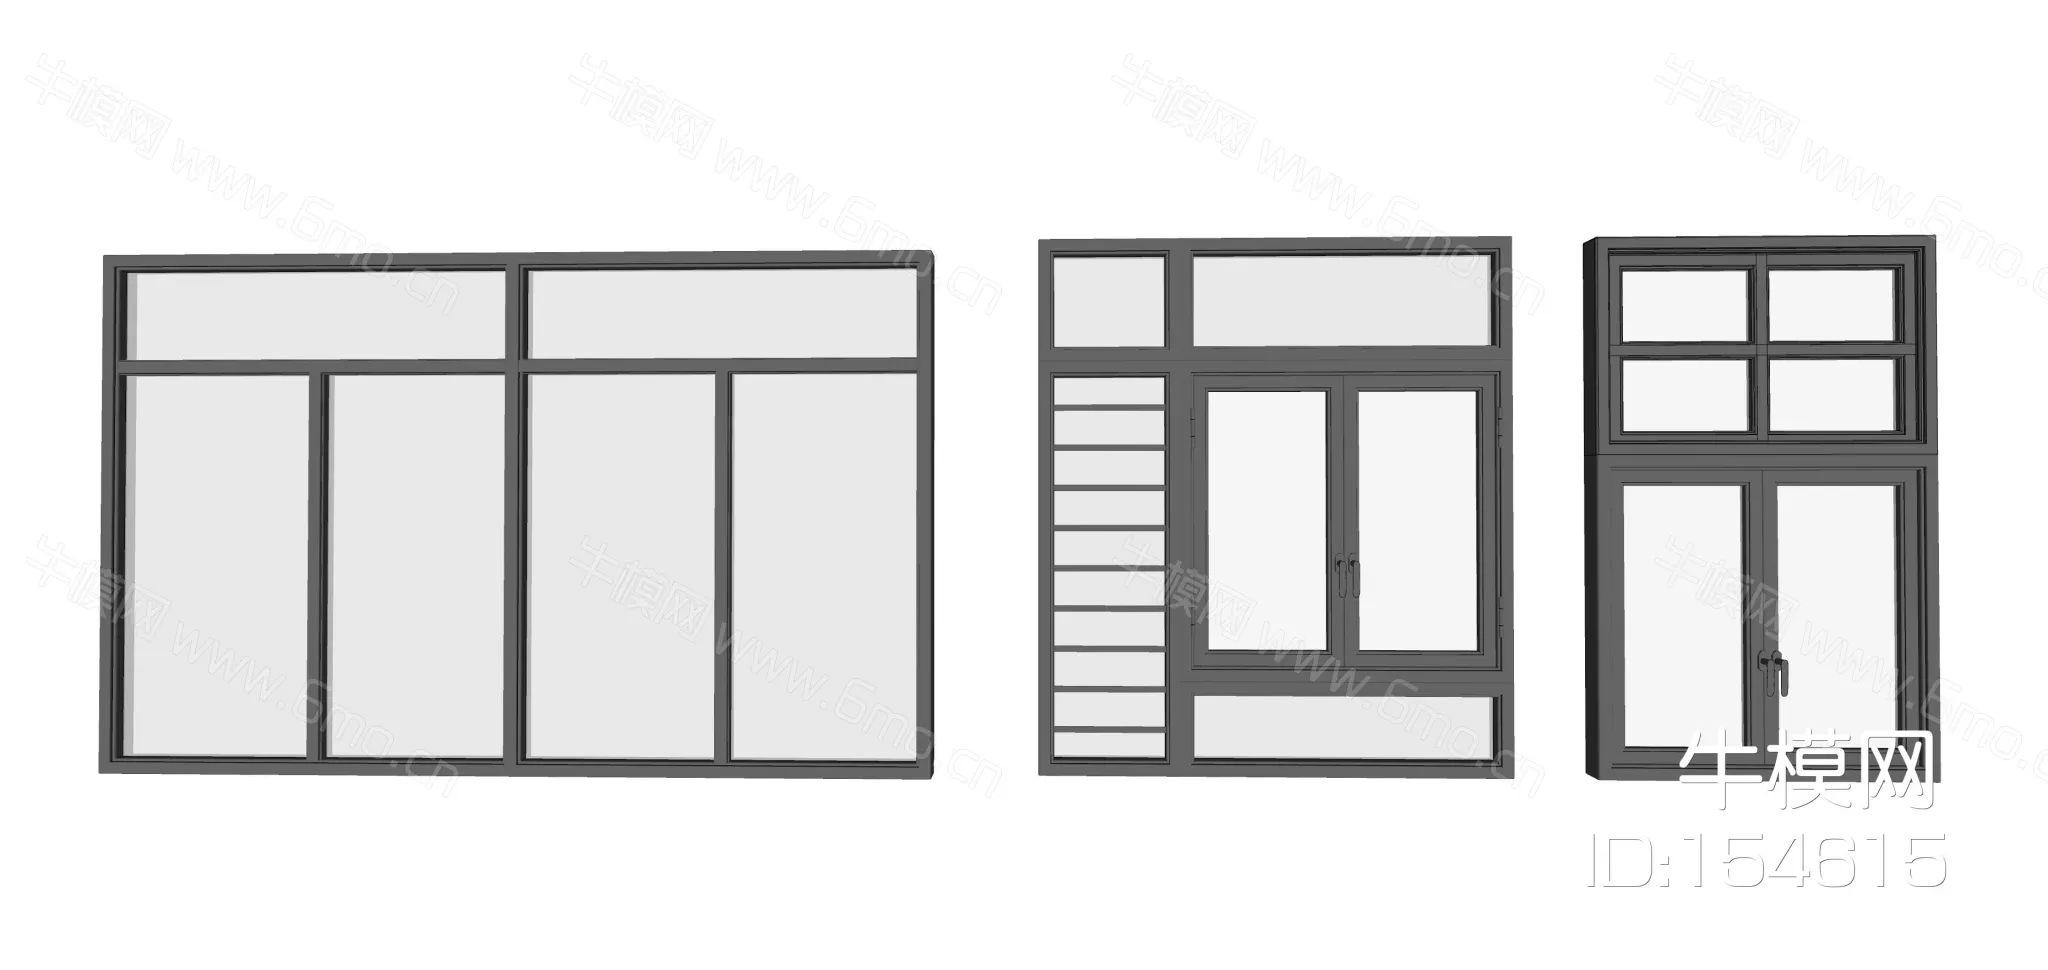 MODERN DOOR AND WINDOWS - SKETCHUP 3D MODEL - ENSCAPE - 154615